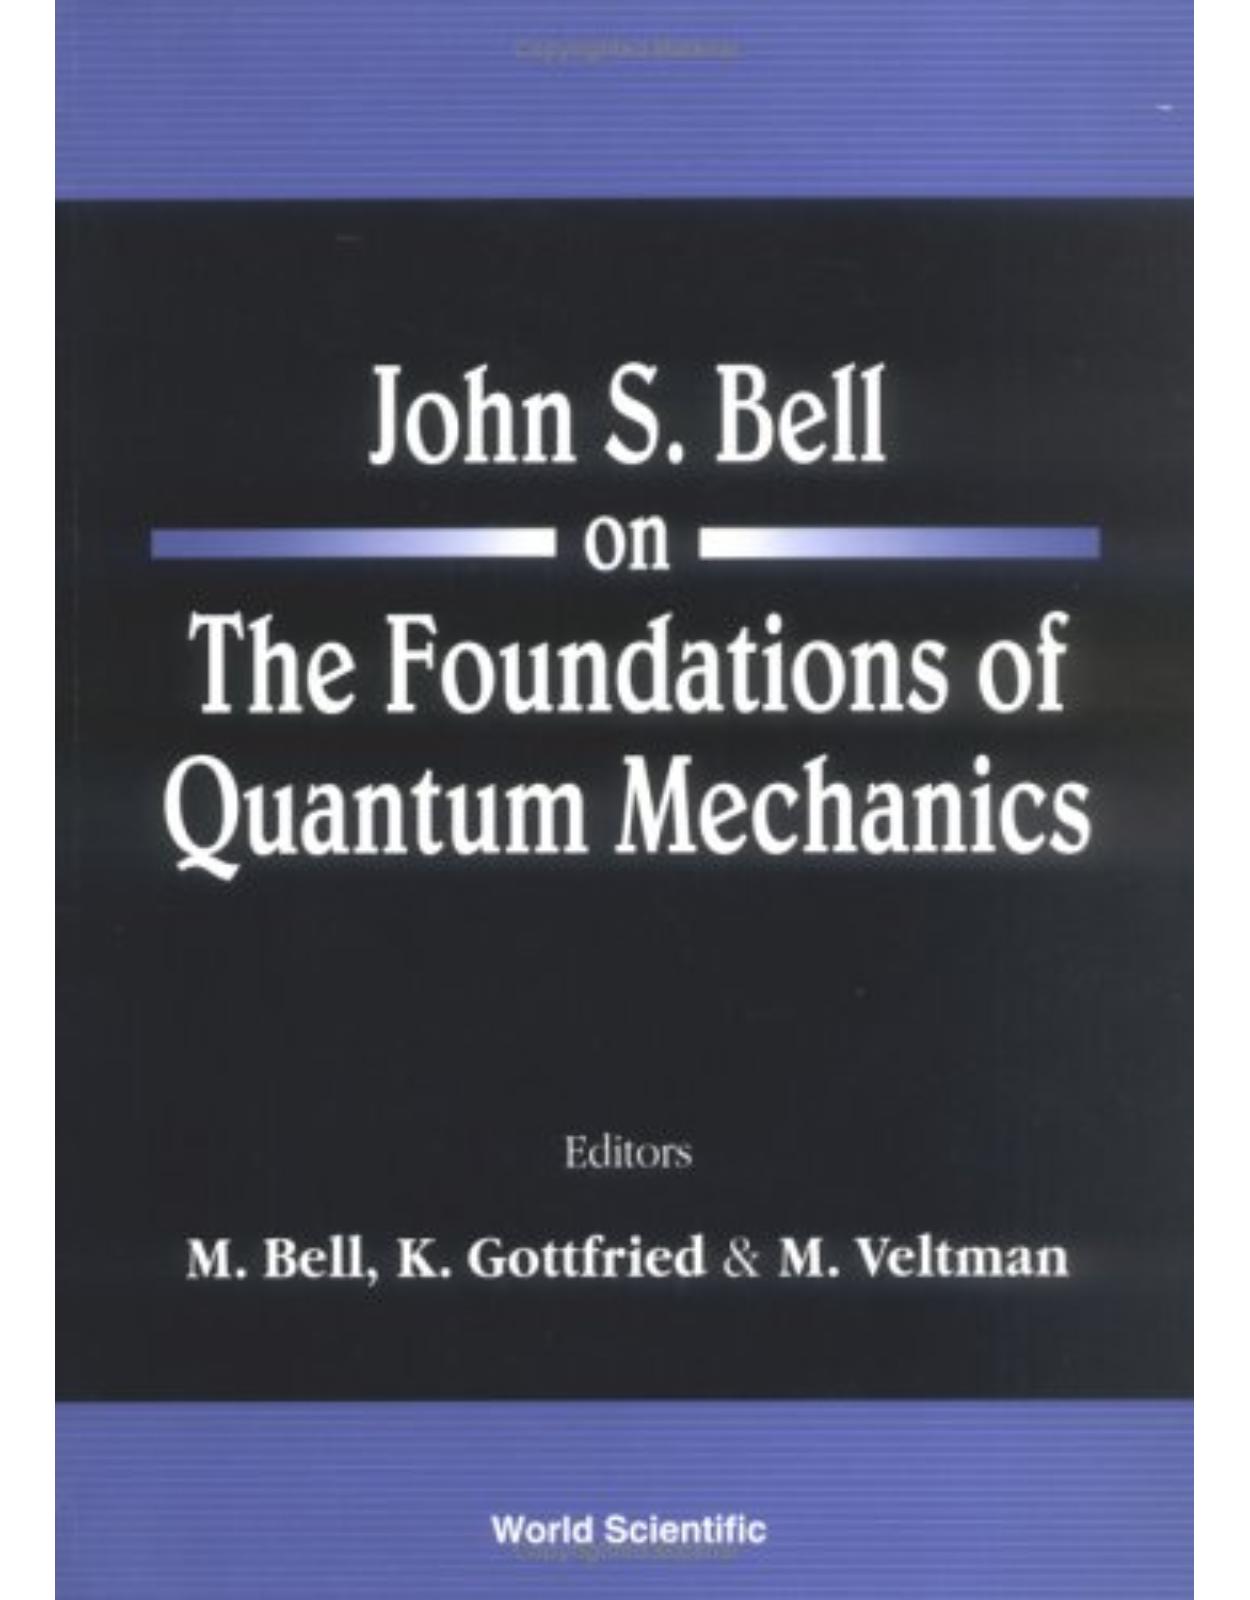 John S. Bell on The Foundations of Quantum Mechanics